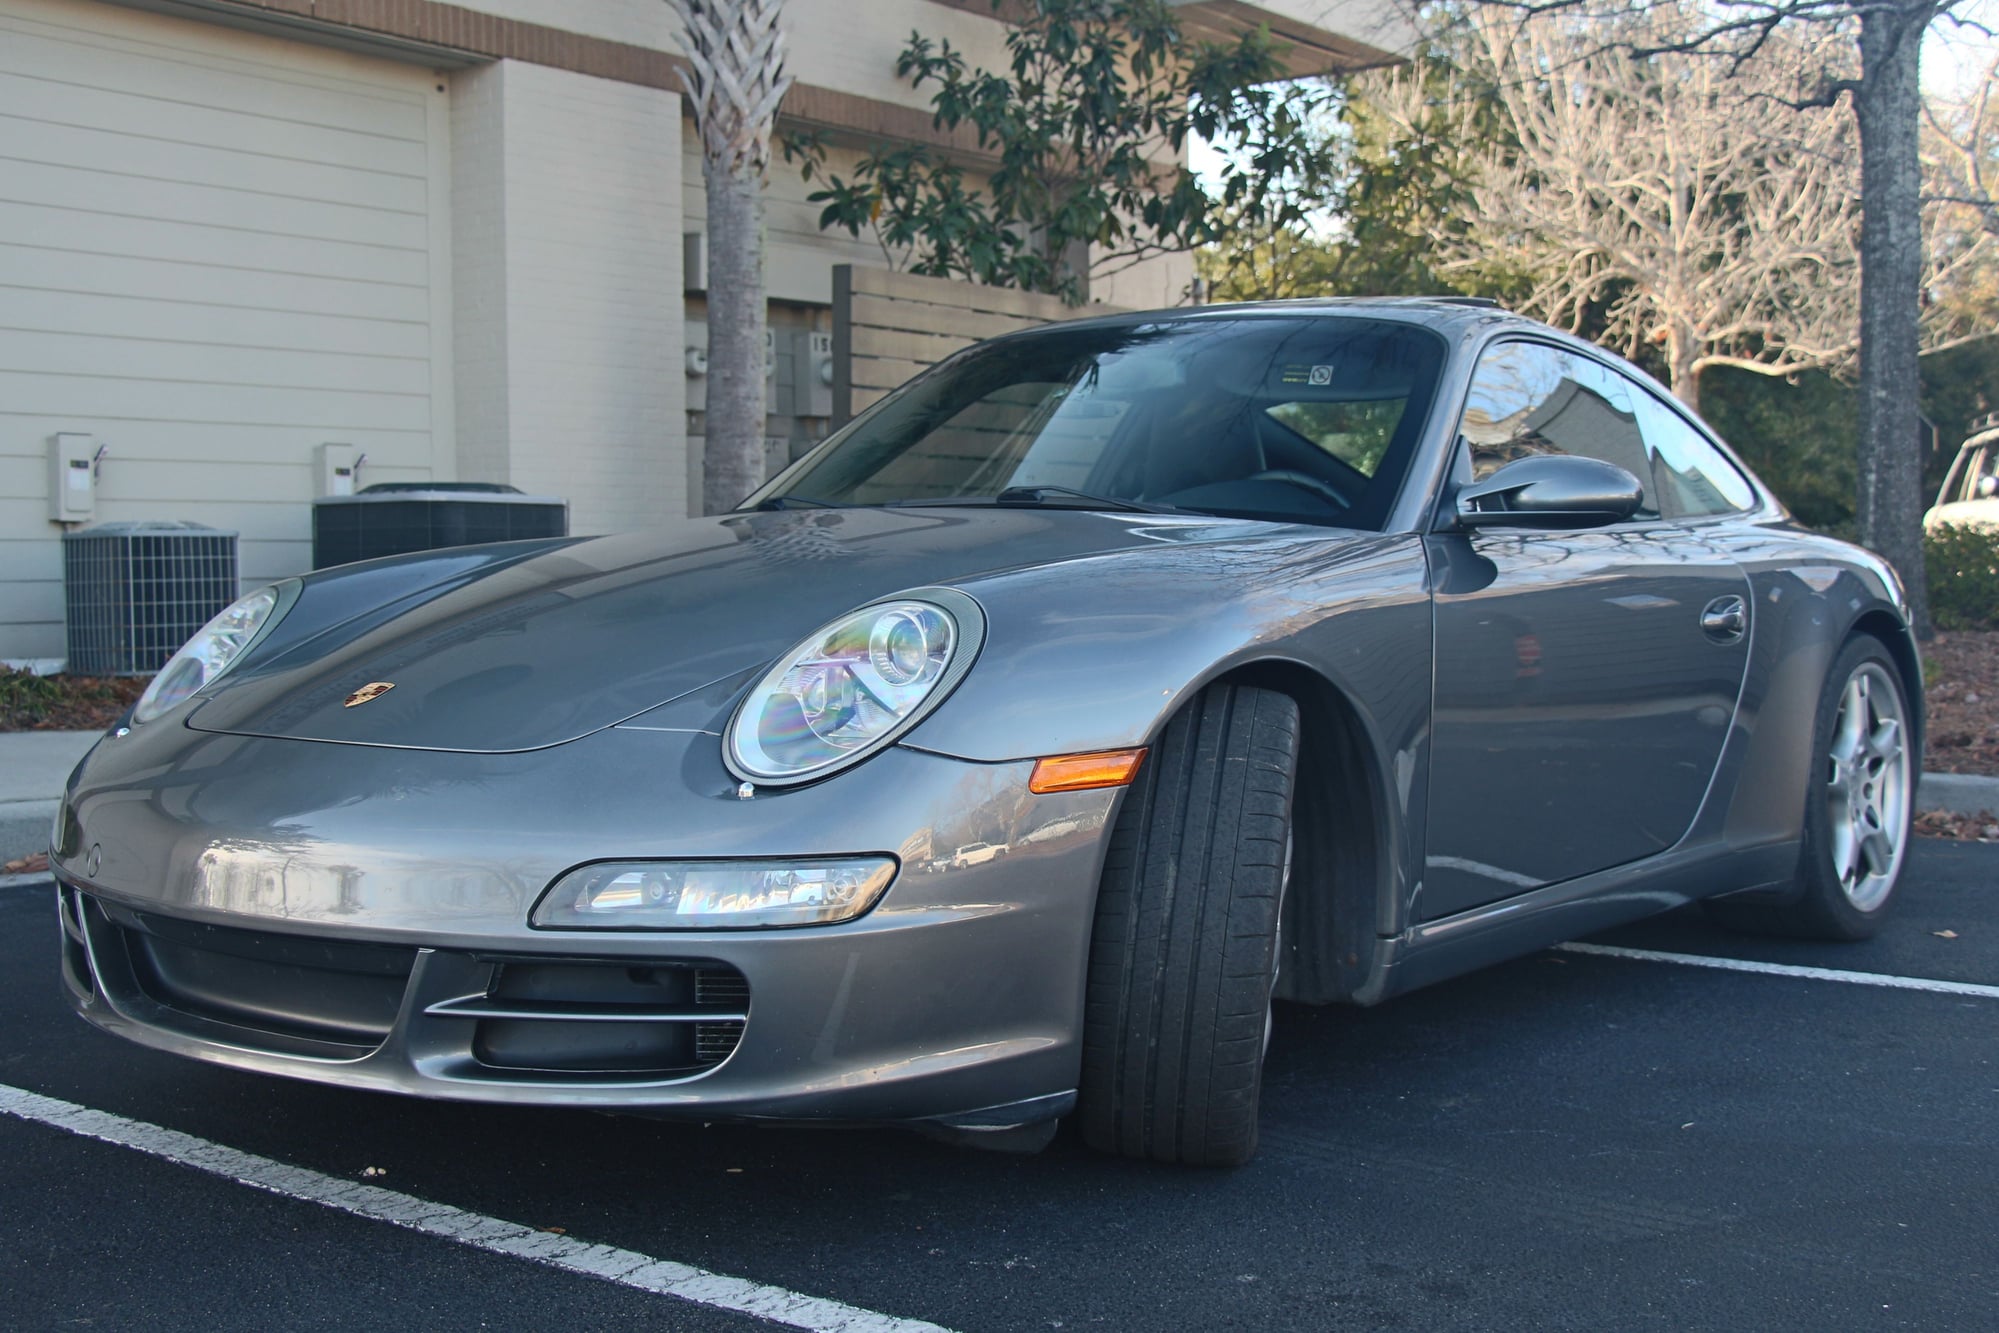 2007 Porsche 911 - 2007 Porsche Carrera S (997.1) in Beautiful Meteor Gray Metallic! - Used - VIN WPOAB29947S731427 - 84,750 Miles - 6 cyl - 2WD - Manual - Coupe - Gray - Mt Pleasant, SC 29464, United States